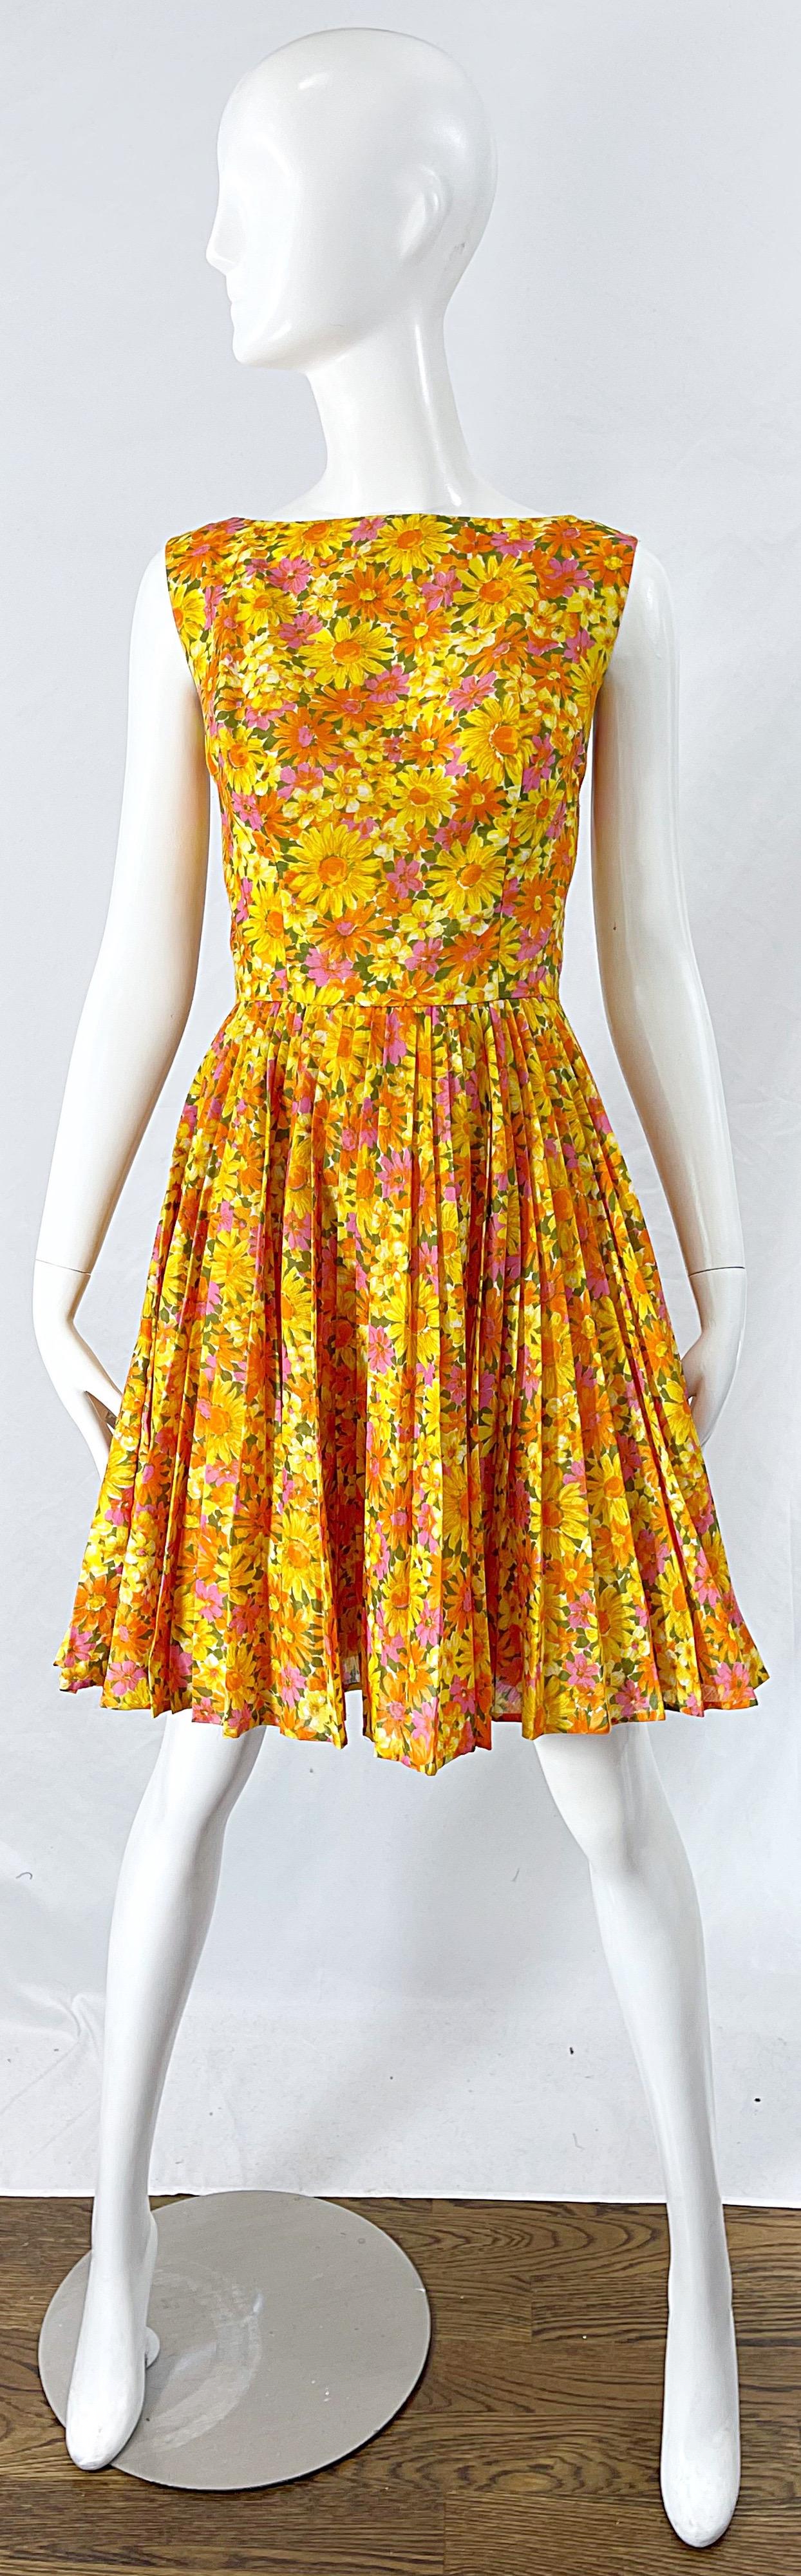 1950s Suzy Perette Yellow Pink Orange Daisy Print Cotton Vintage 50s Dress For Sale 6